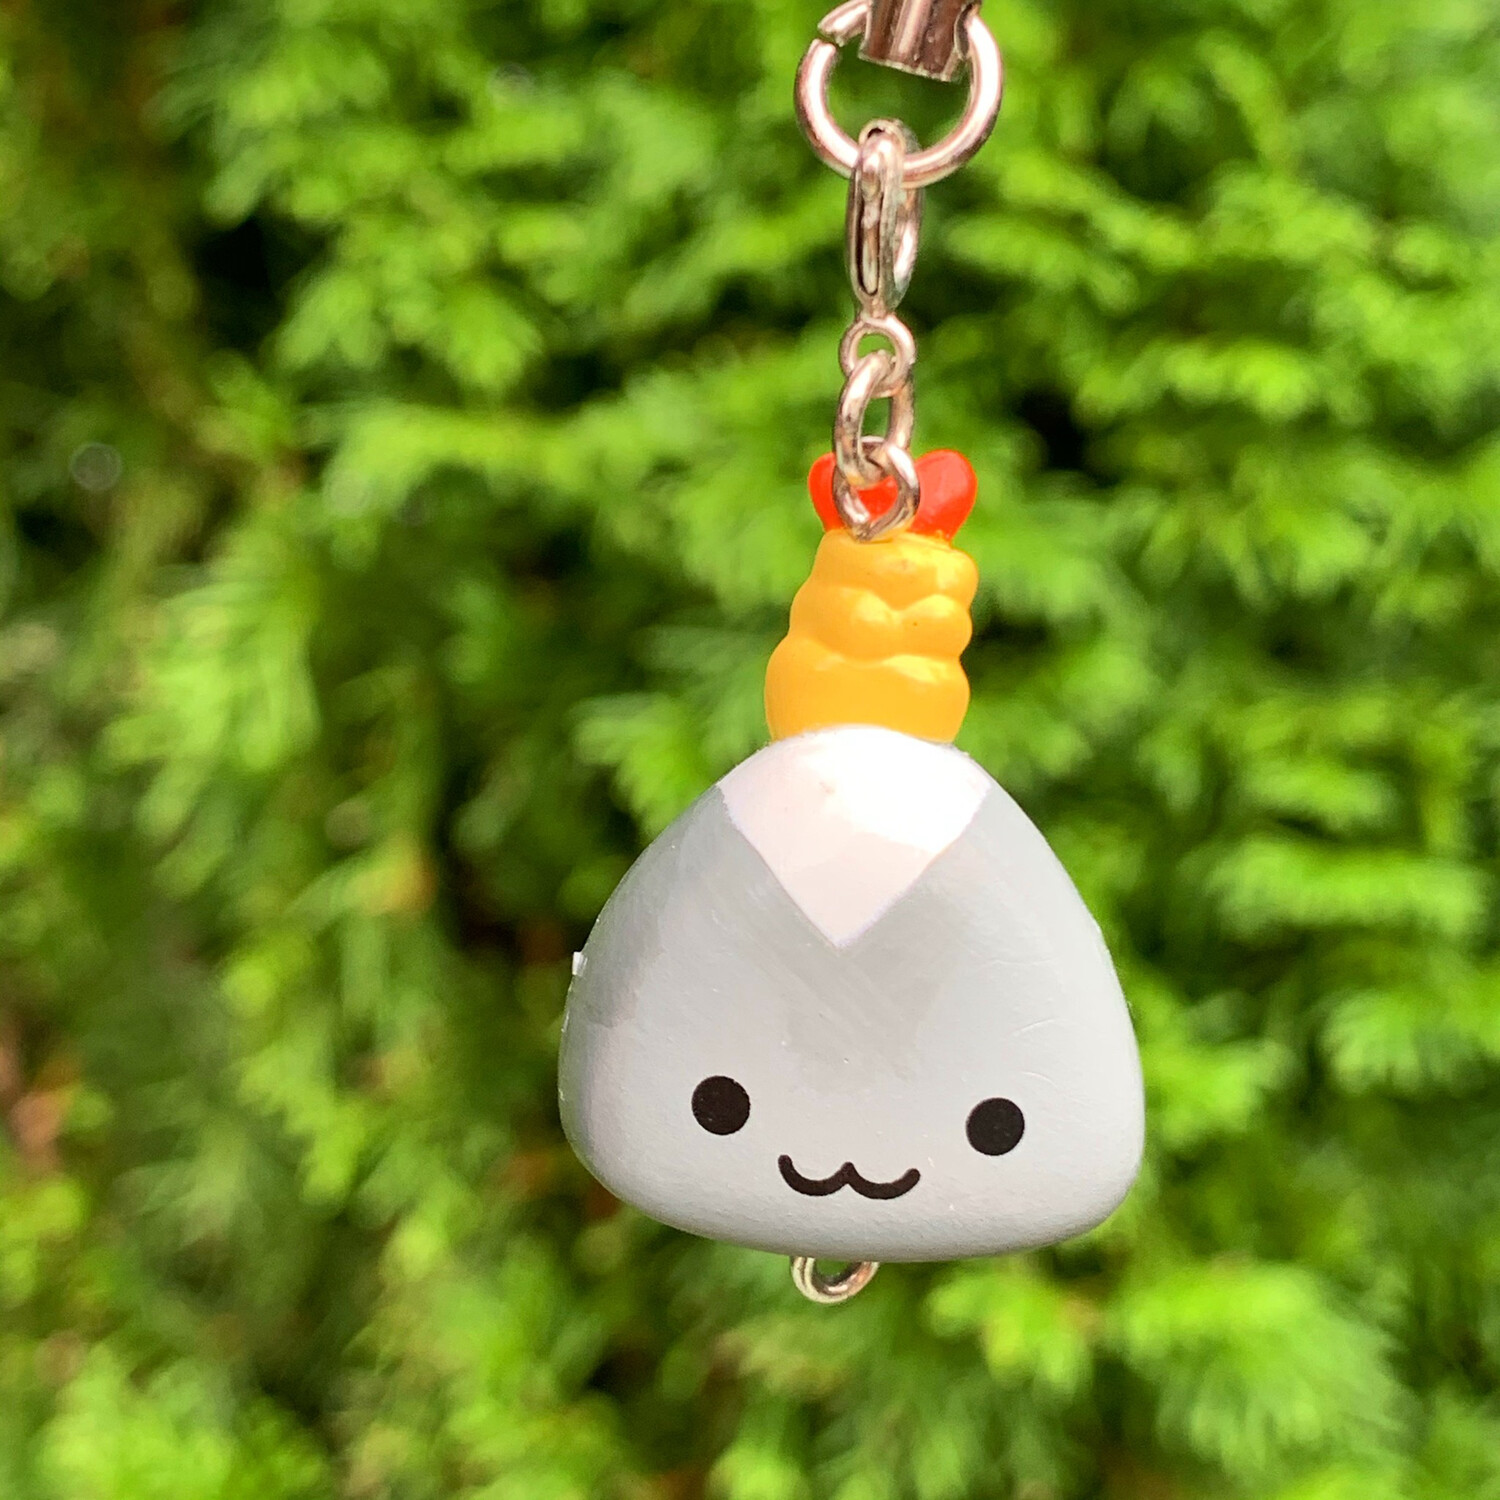 San-x Onigiri Rice Ball Guy Mascot Strap